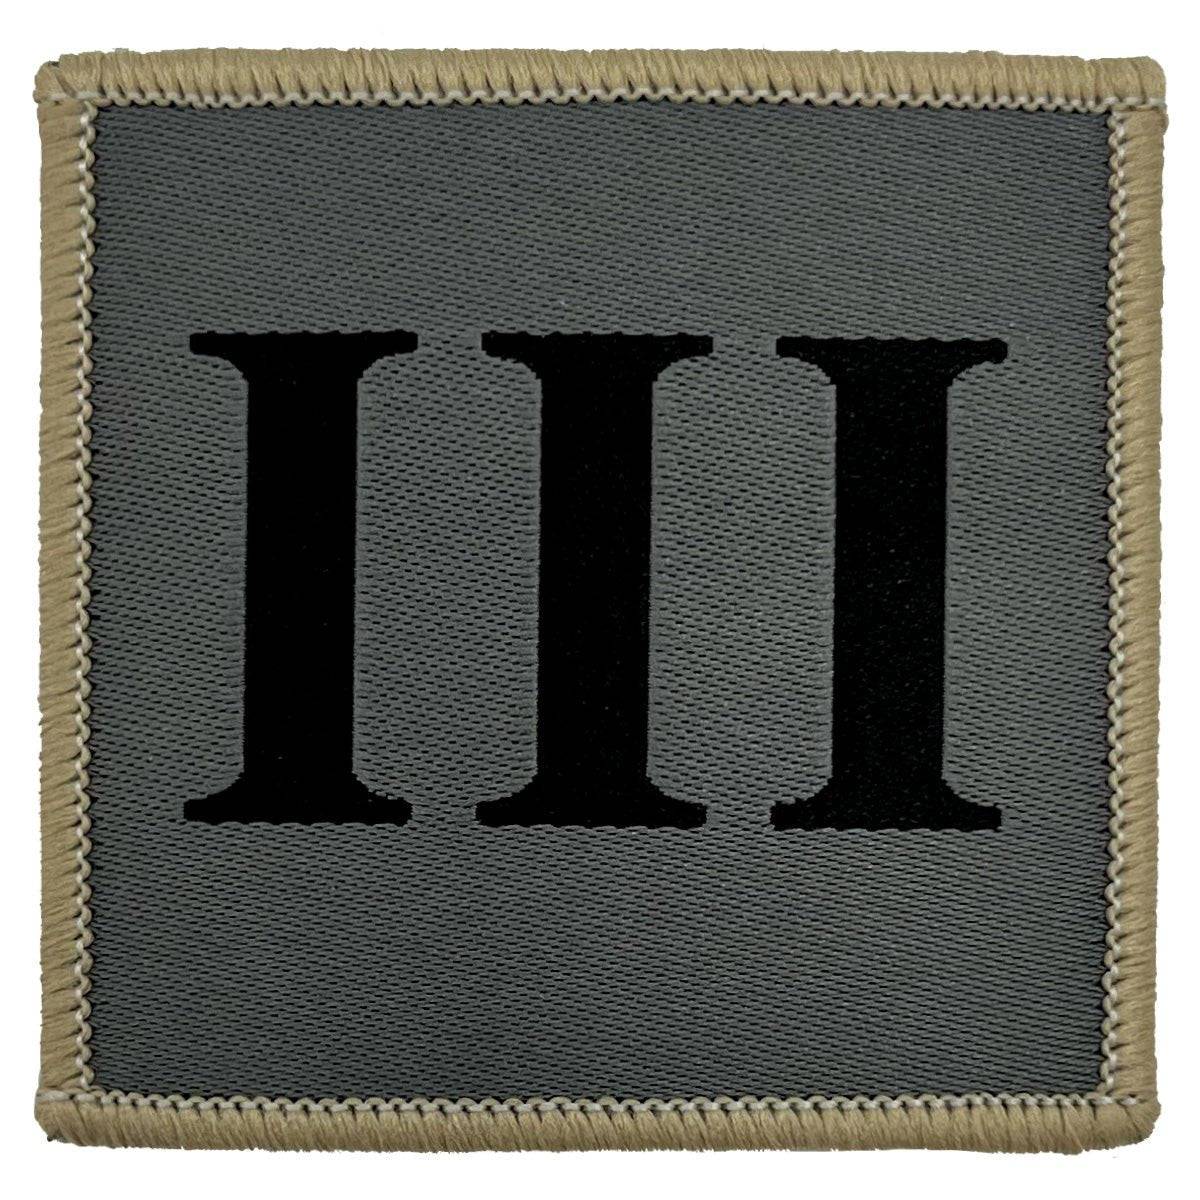 Ranger Regiment III Iron On TRF Badge with Tan Border - John Bull Clothing